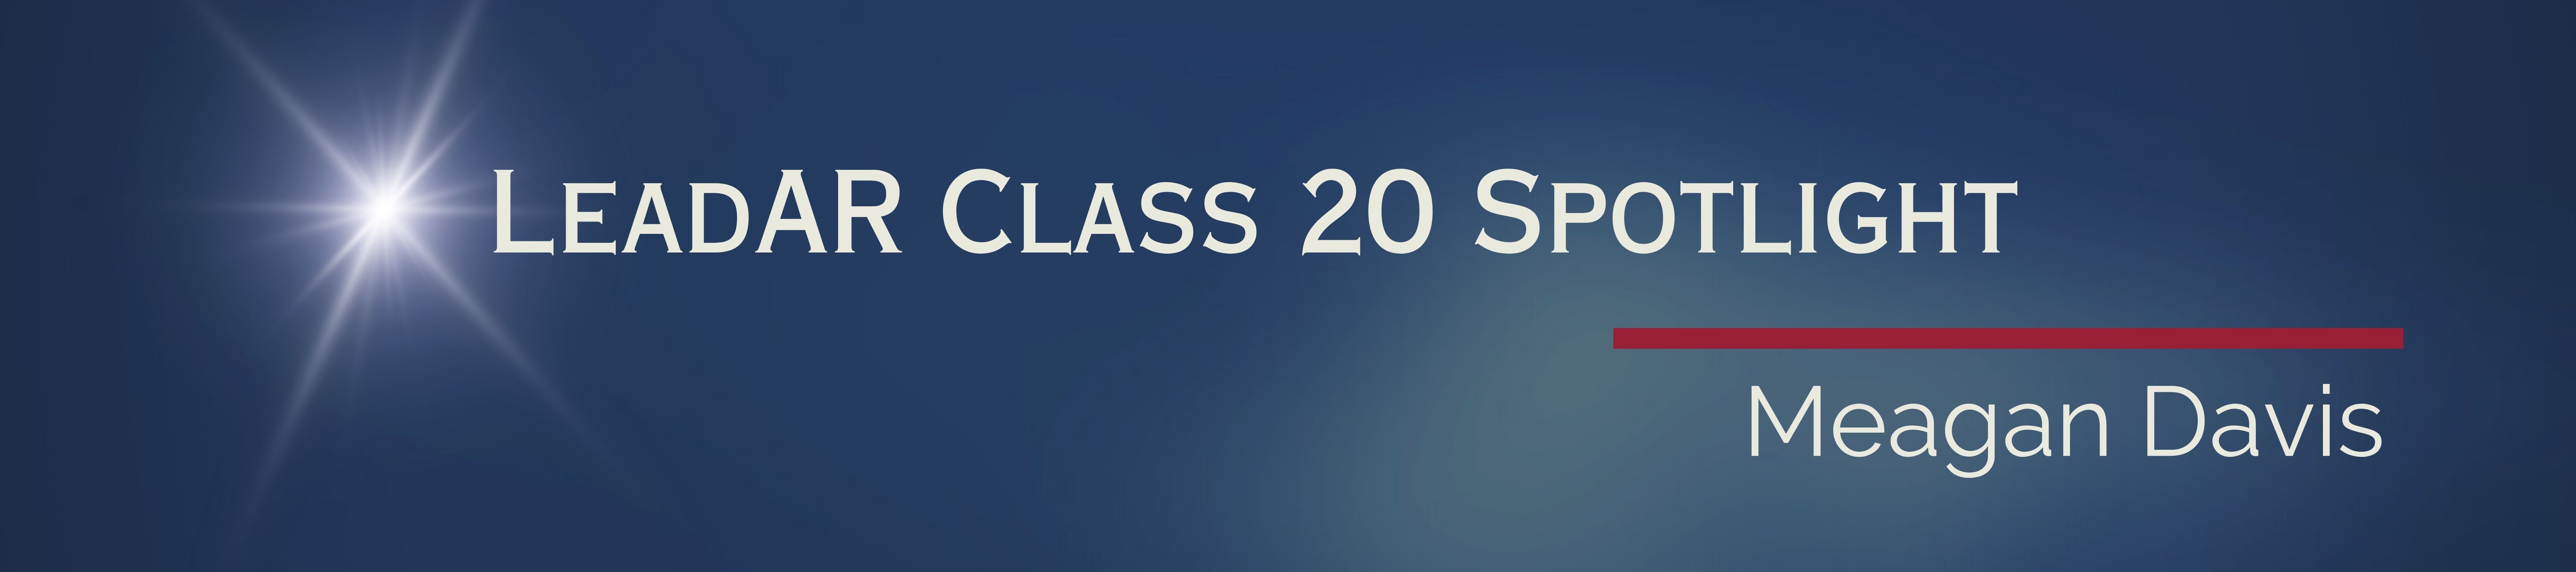 LeadAR Class 20 Spotlight